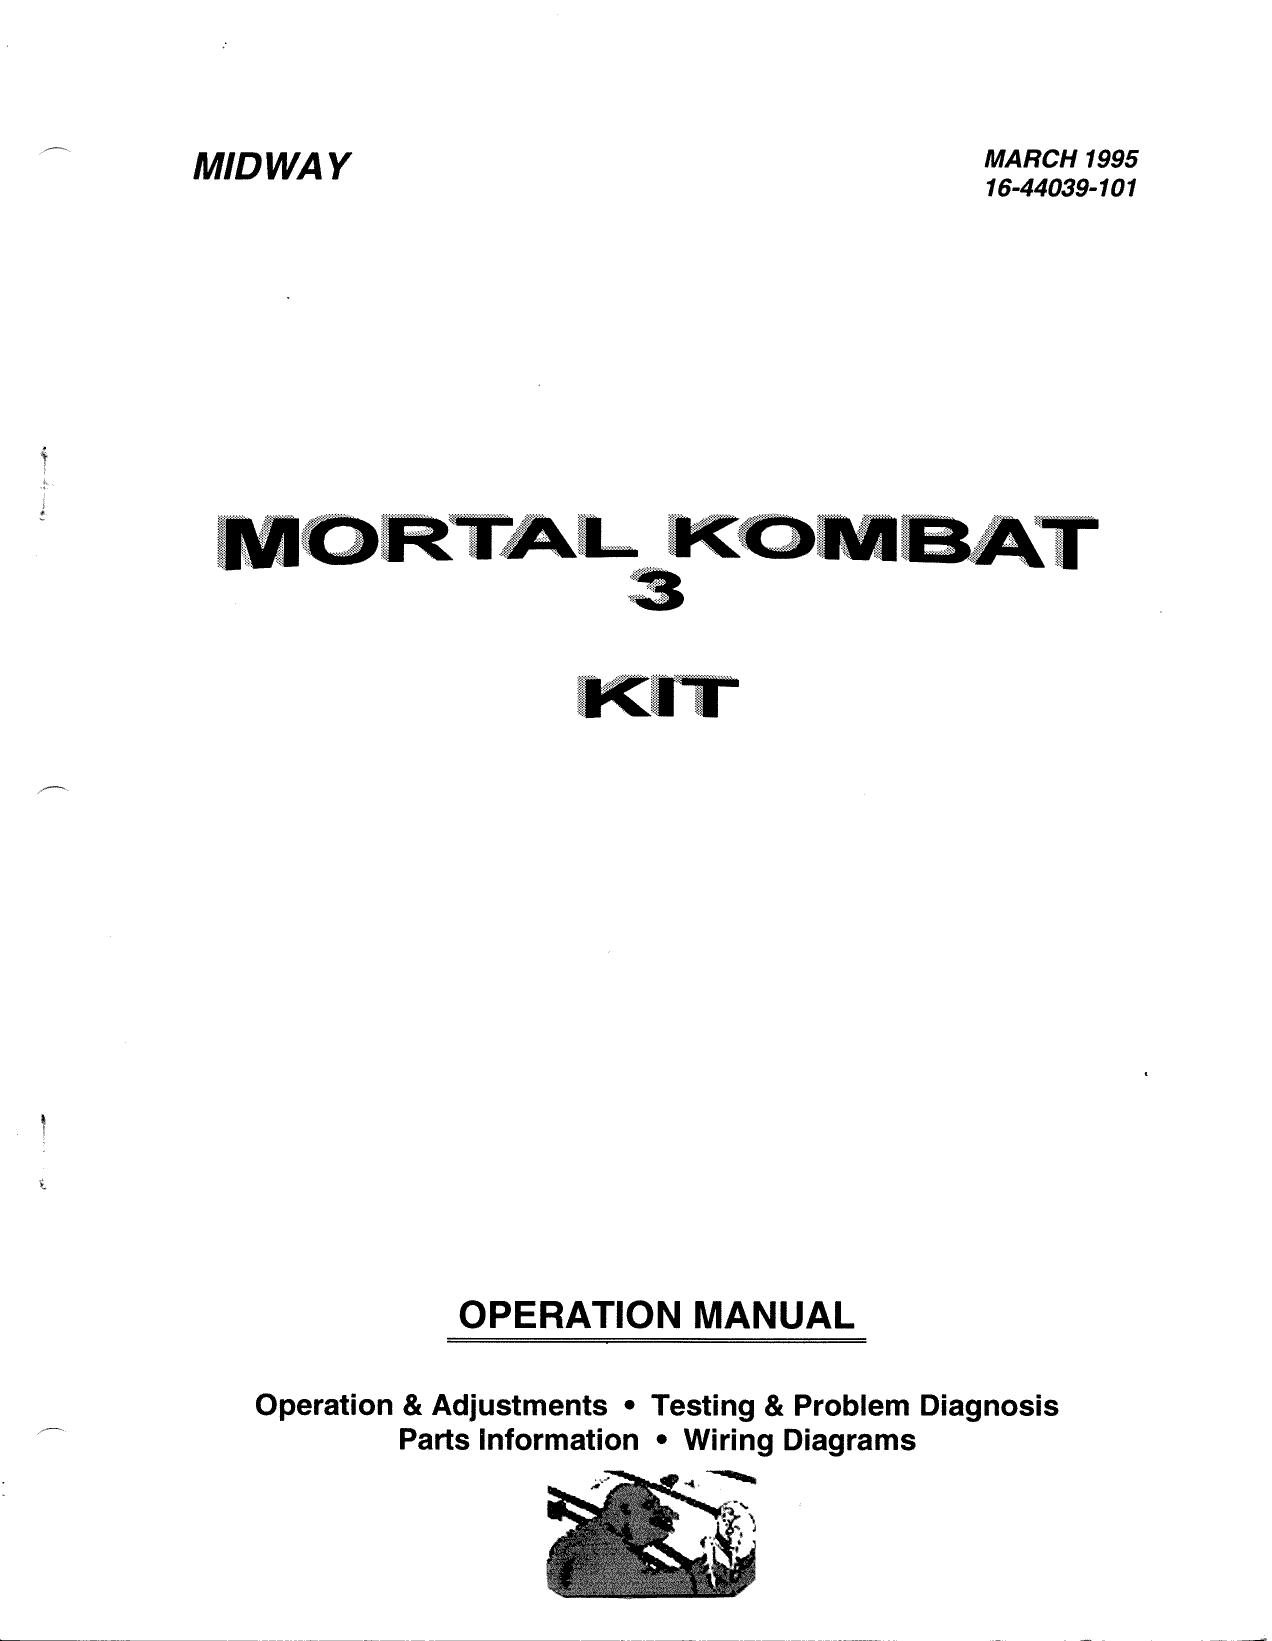 MortalKombat3 Manual